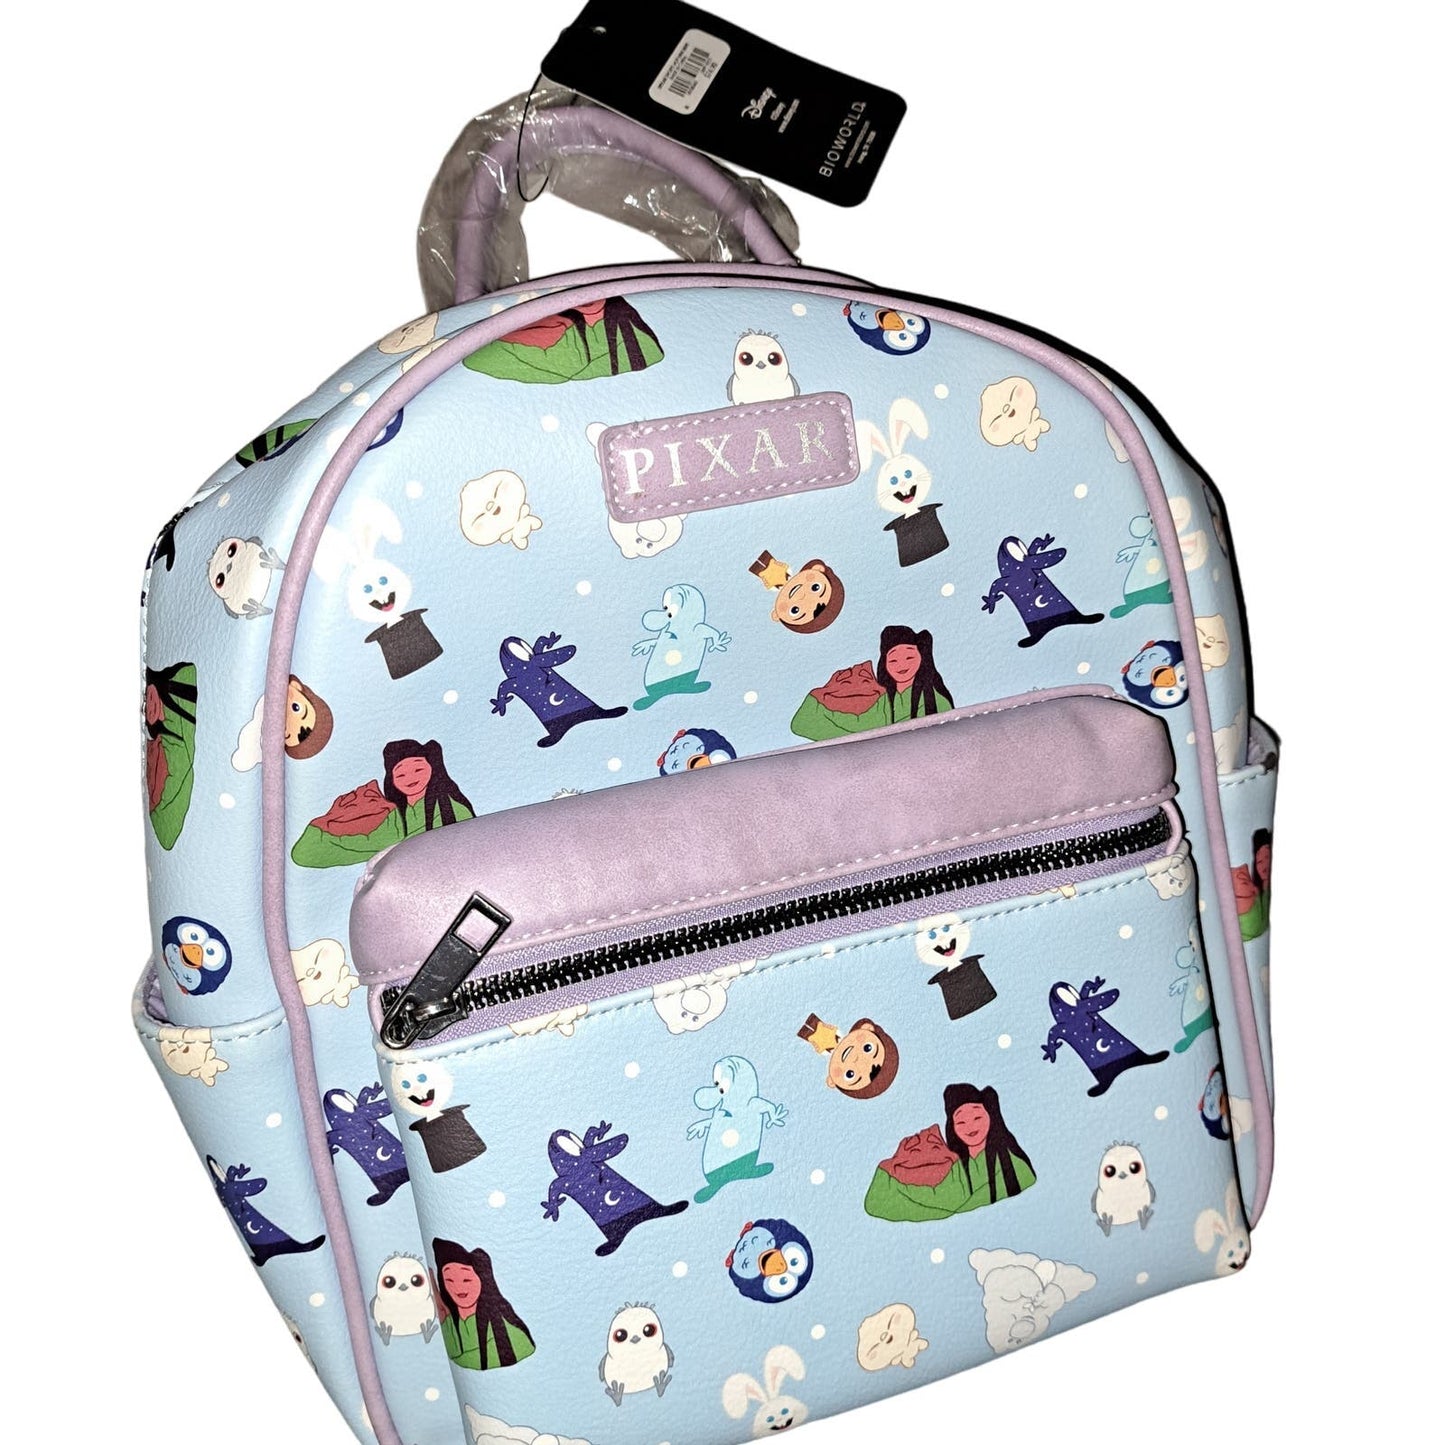 SALE!!! NEW PIXAR Mini Backpack